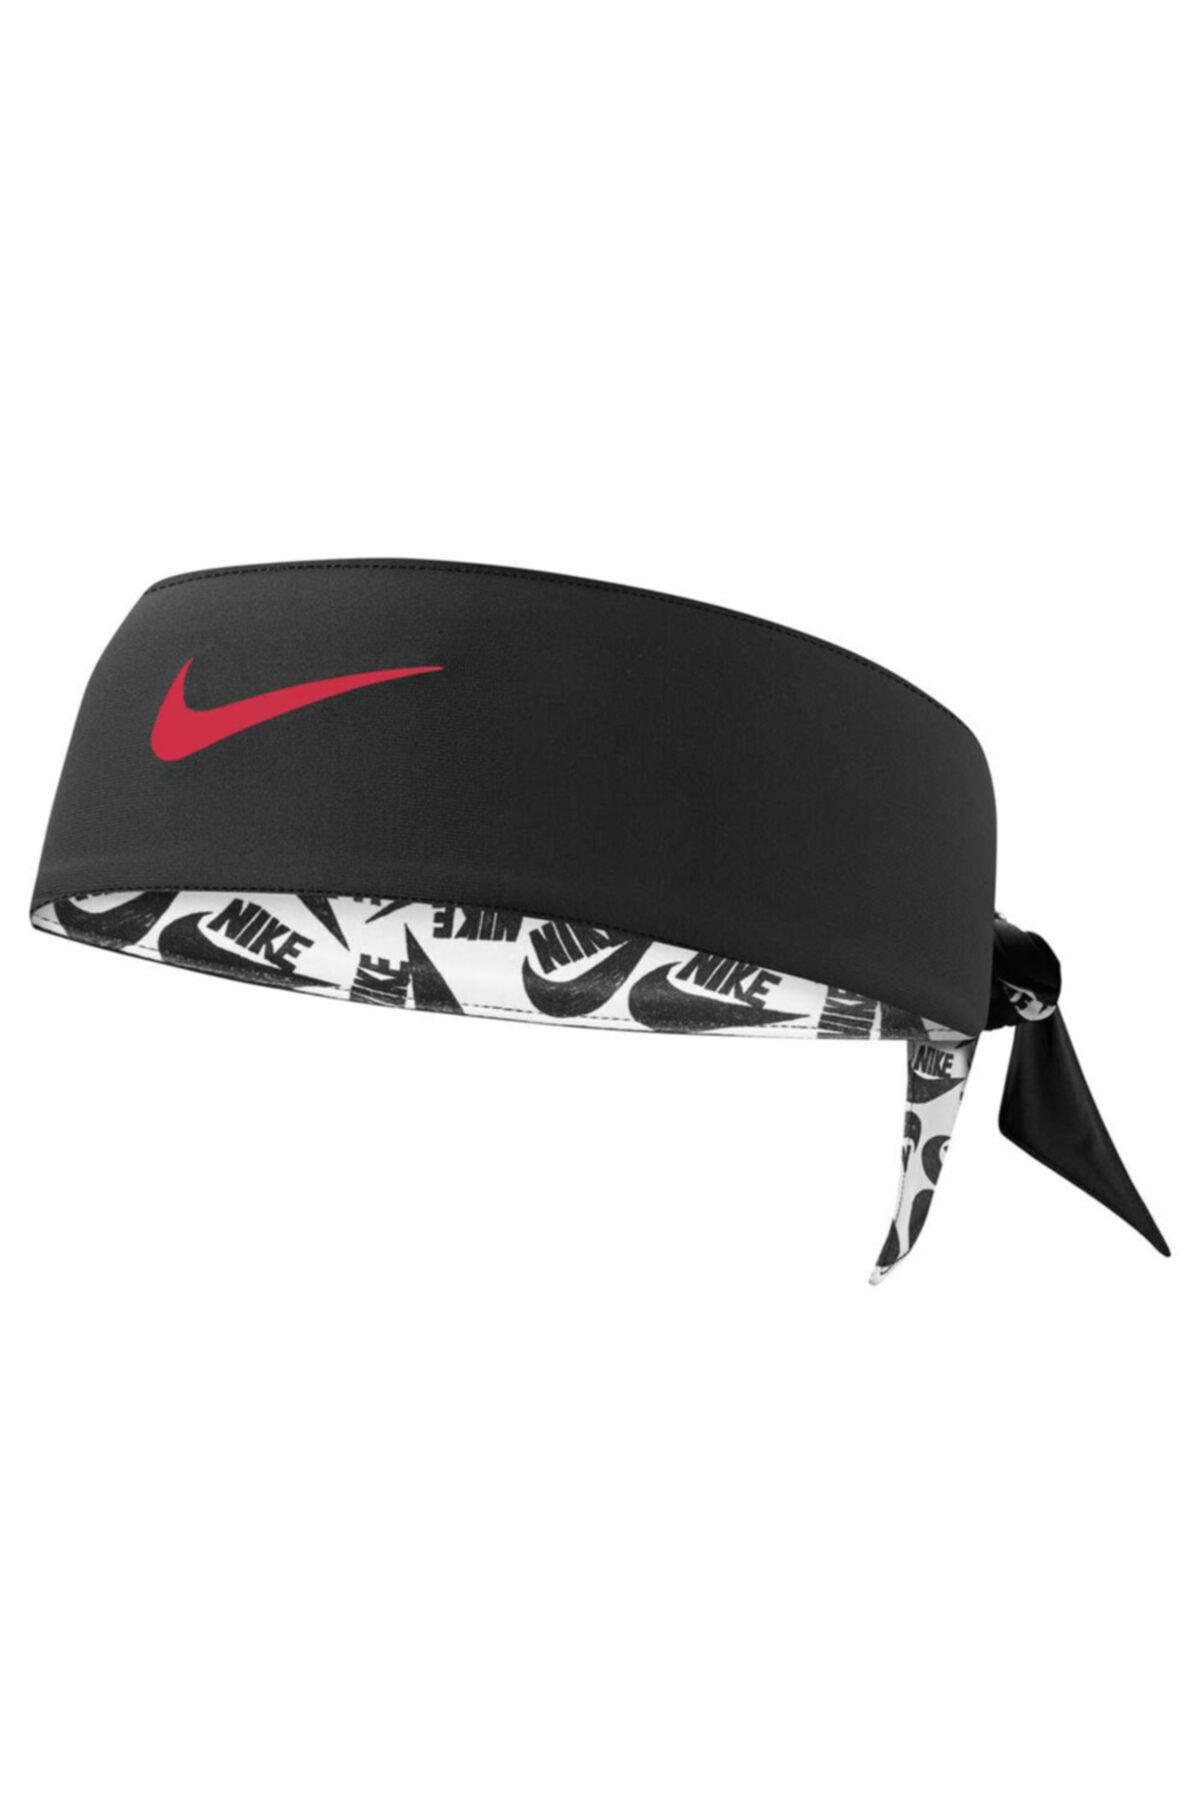 Nike Dry Head Tie Tenis Kafa Bandı